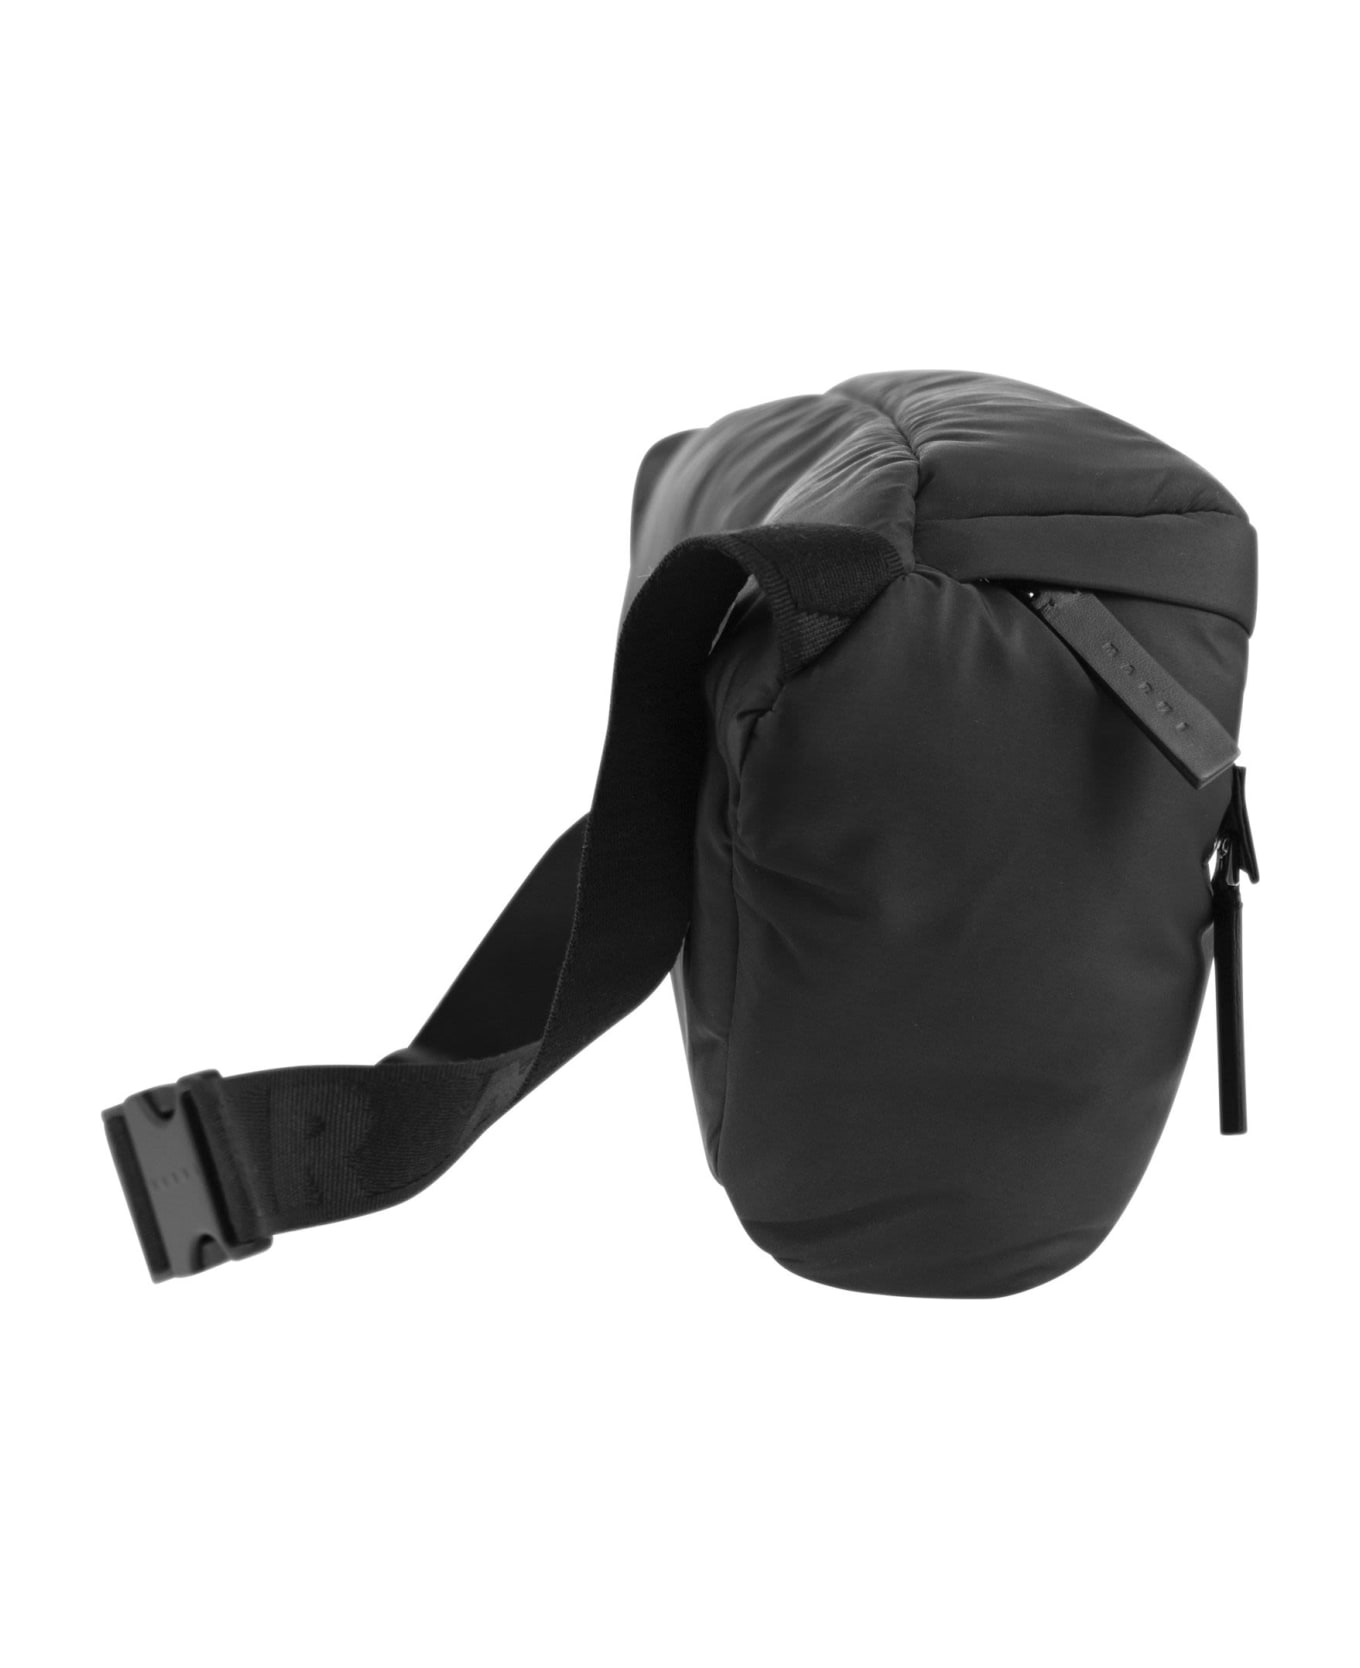 Marni Puff Bum Bag - Black ベルトバッグ